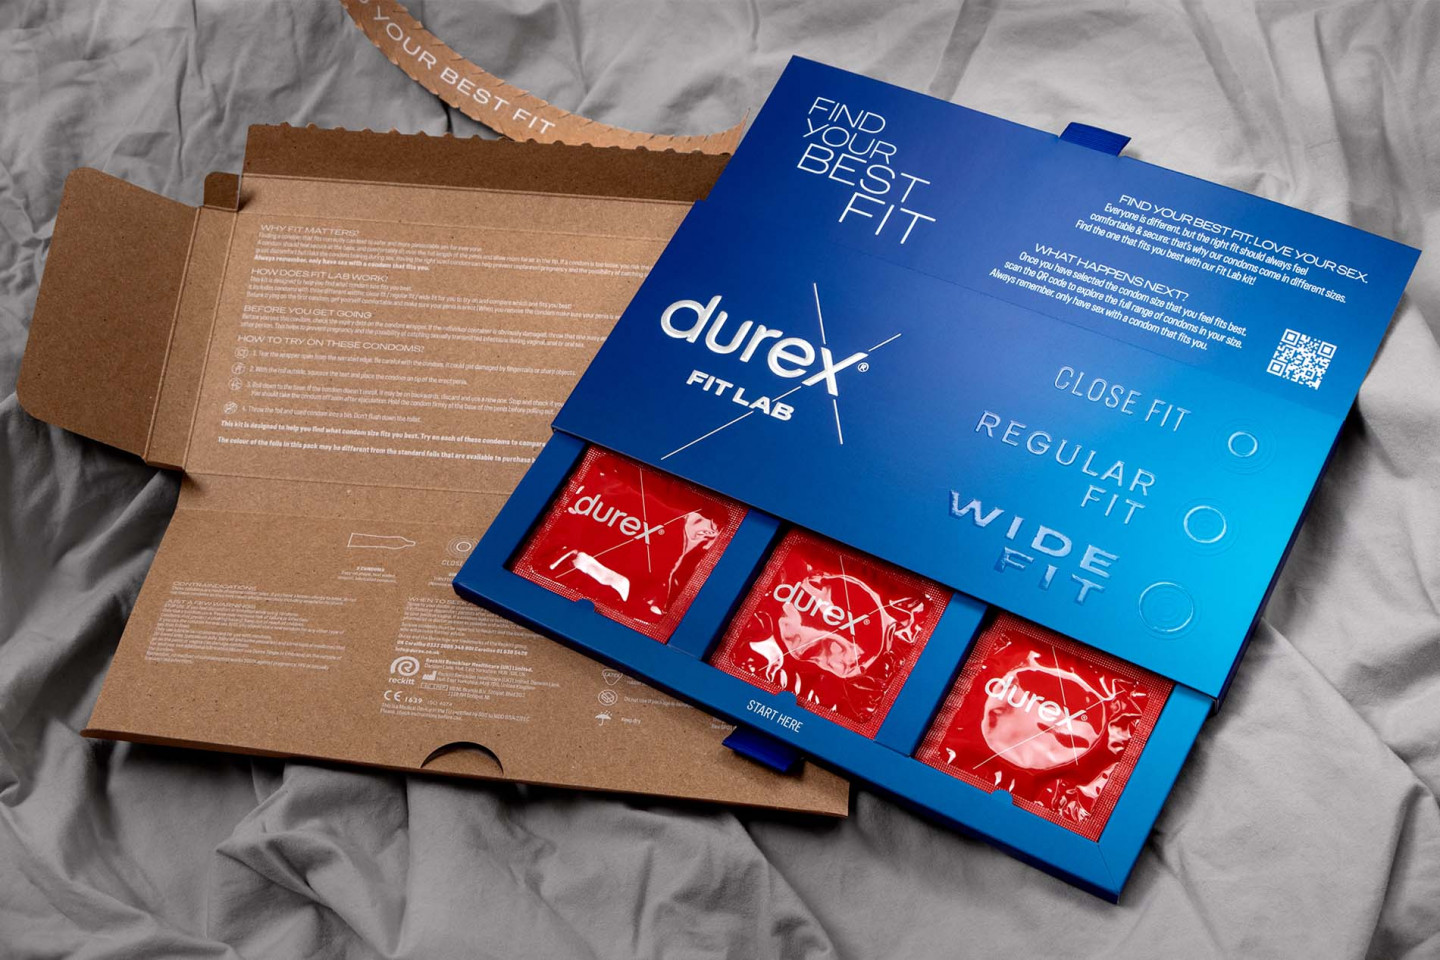 Durex - Fit Lab Trial Kit